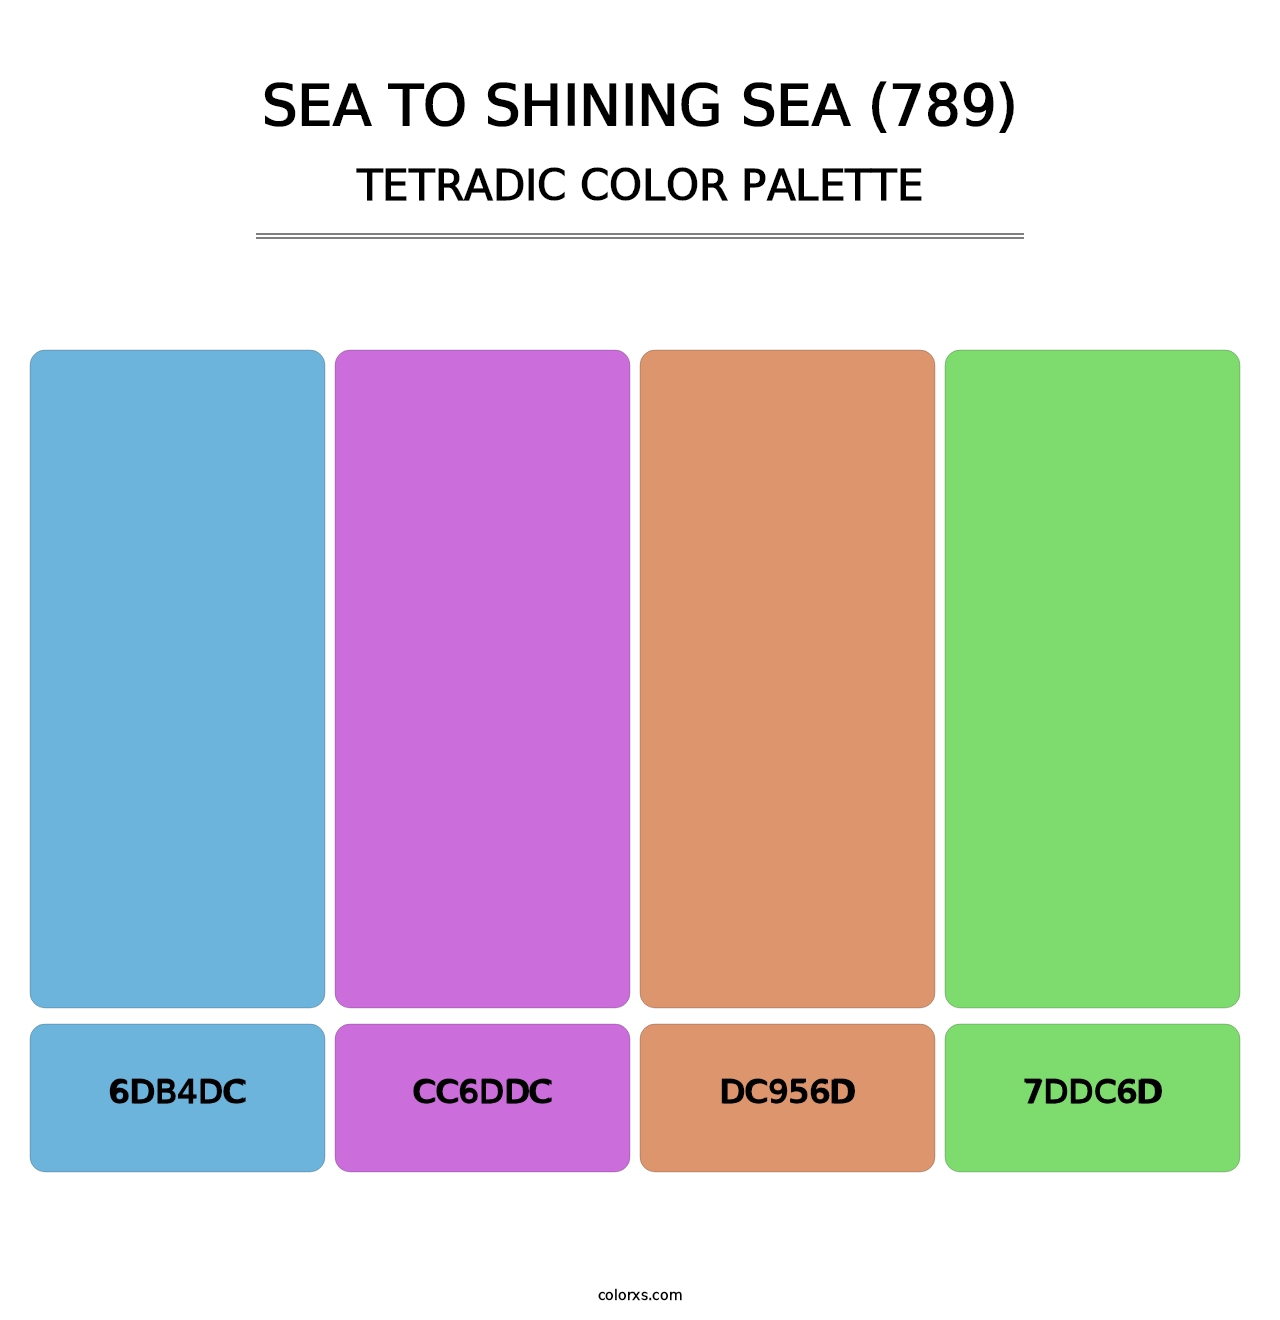 Sea to Shining Sea (789) - Tetradic Color Palette